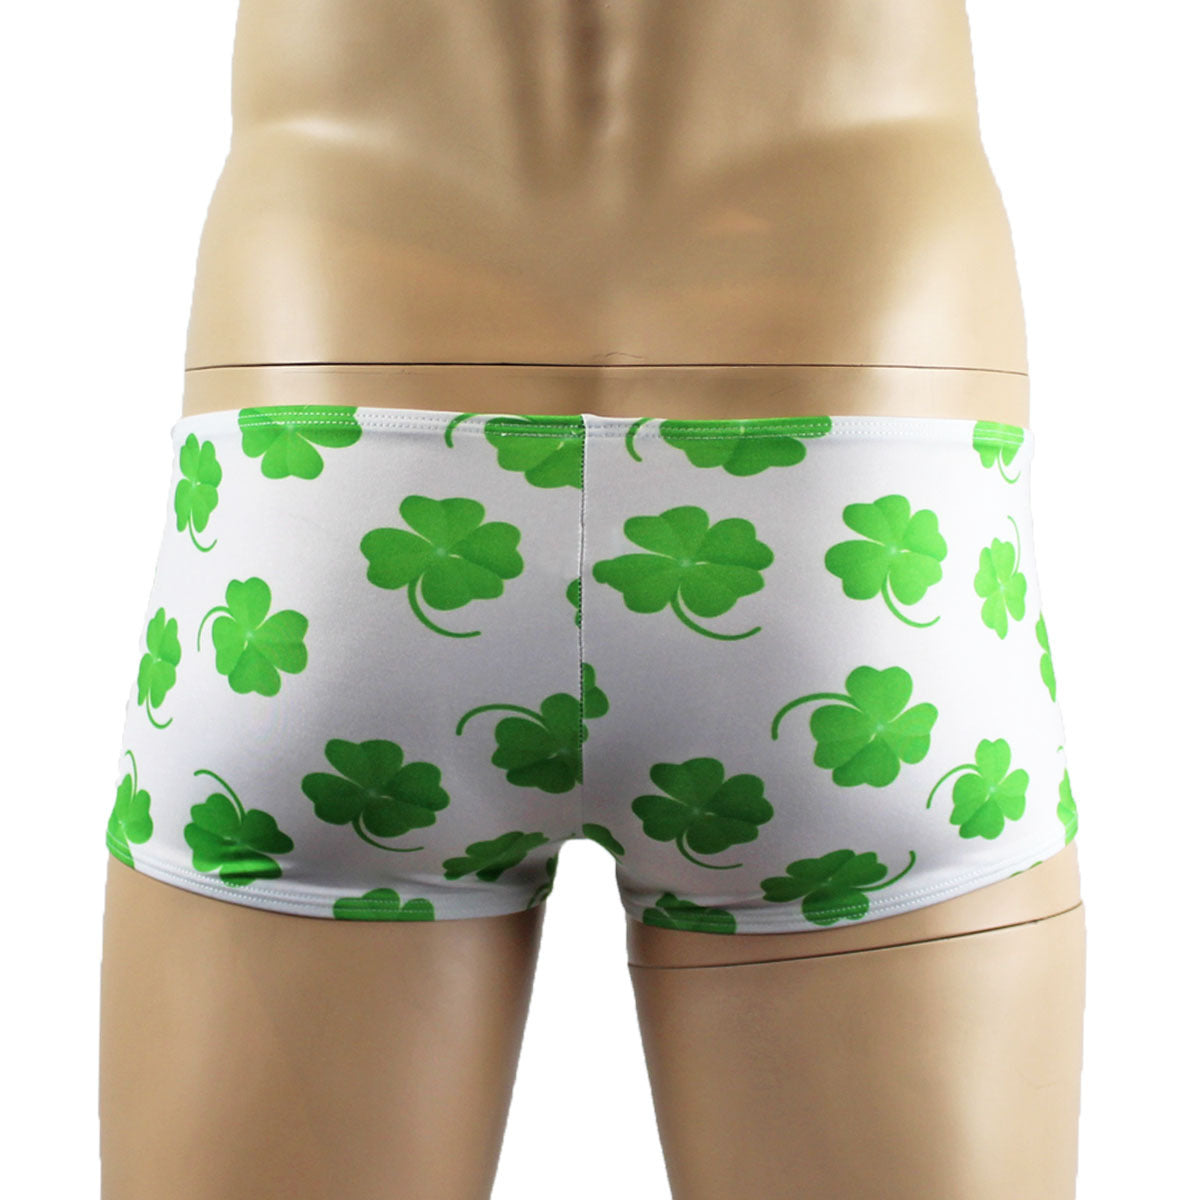 St. Patrick's Day Men's Underwear Specials for Good Luck!